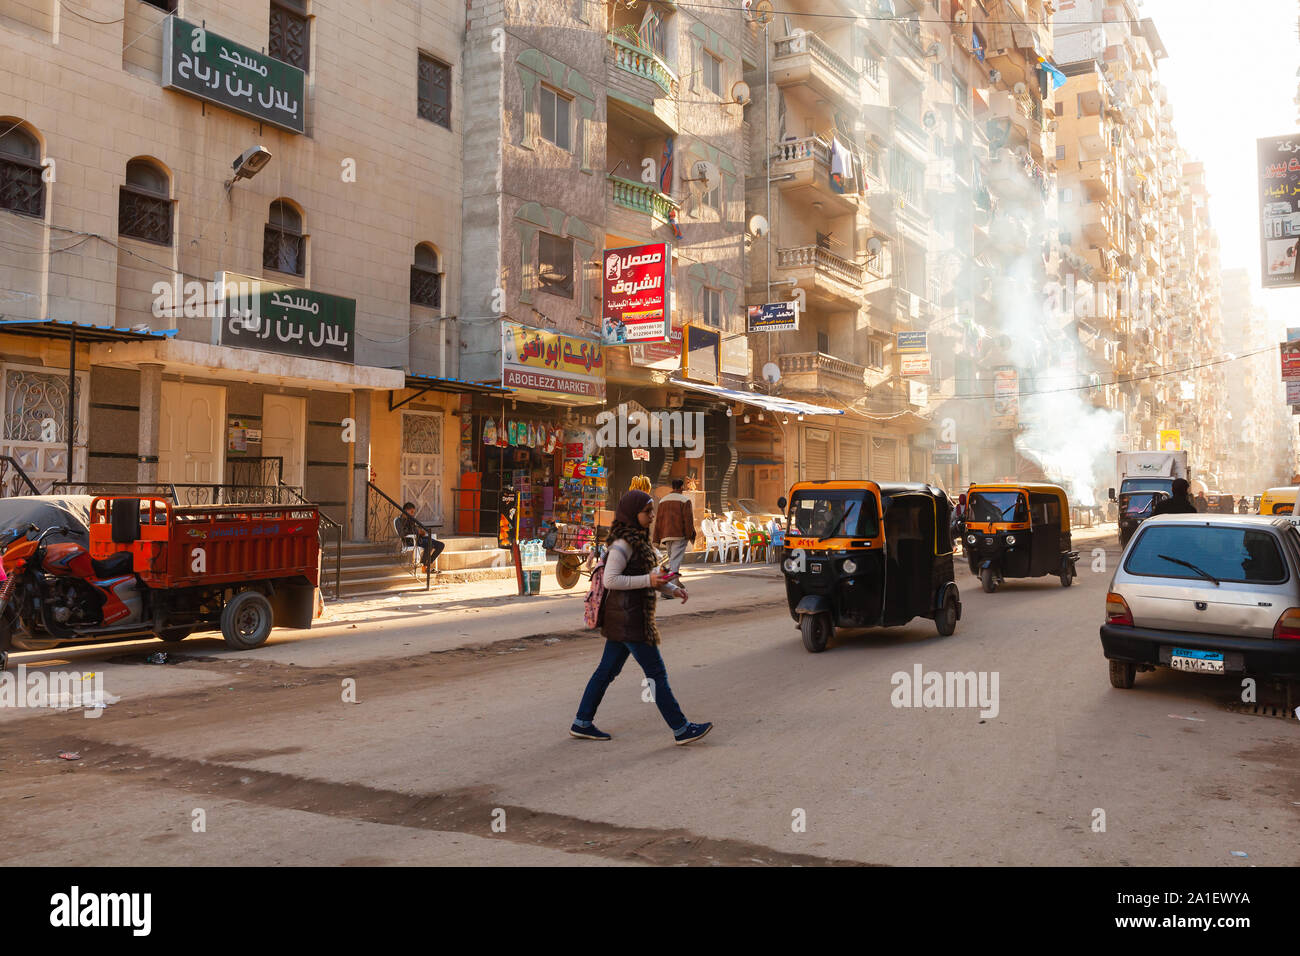 Alexandria, Egypt - December 18, 2018: Alexandria street view, ordinary people walk the street with auto rickshaws and cars Stock Photo